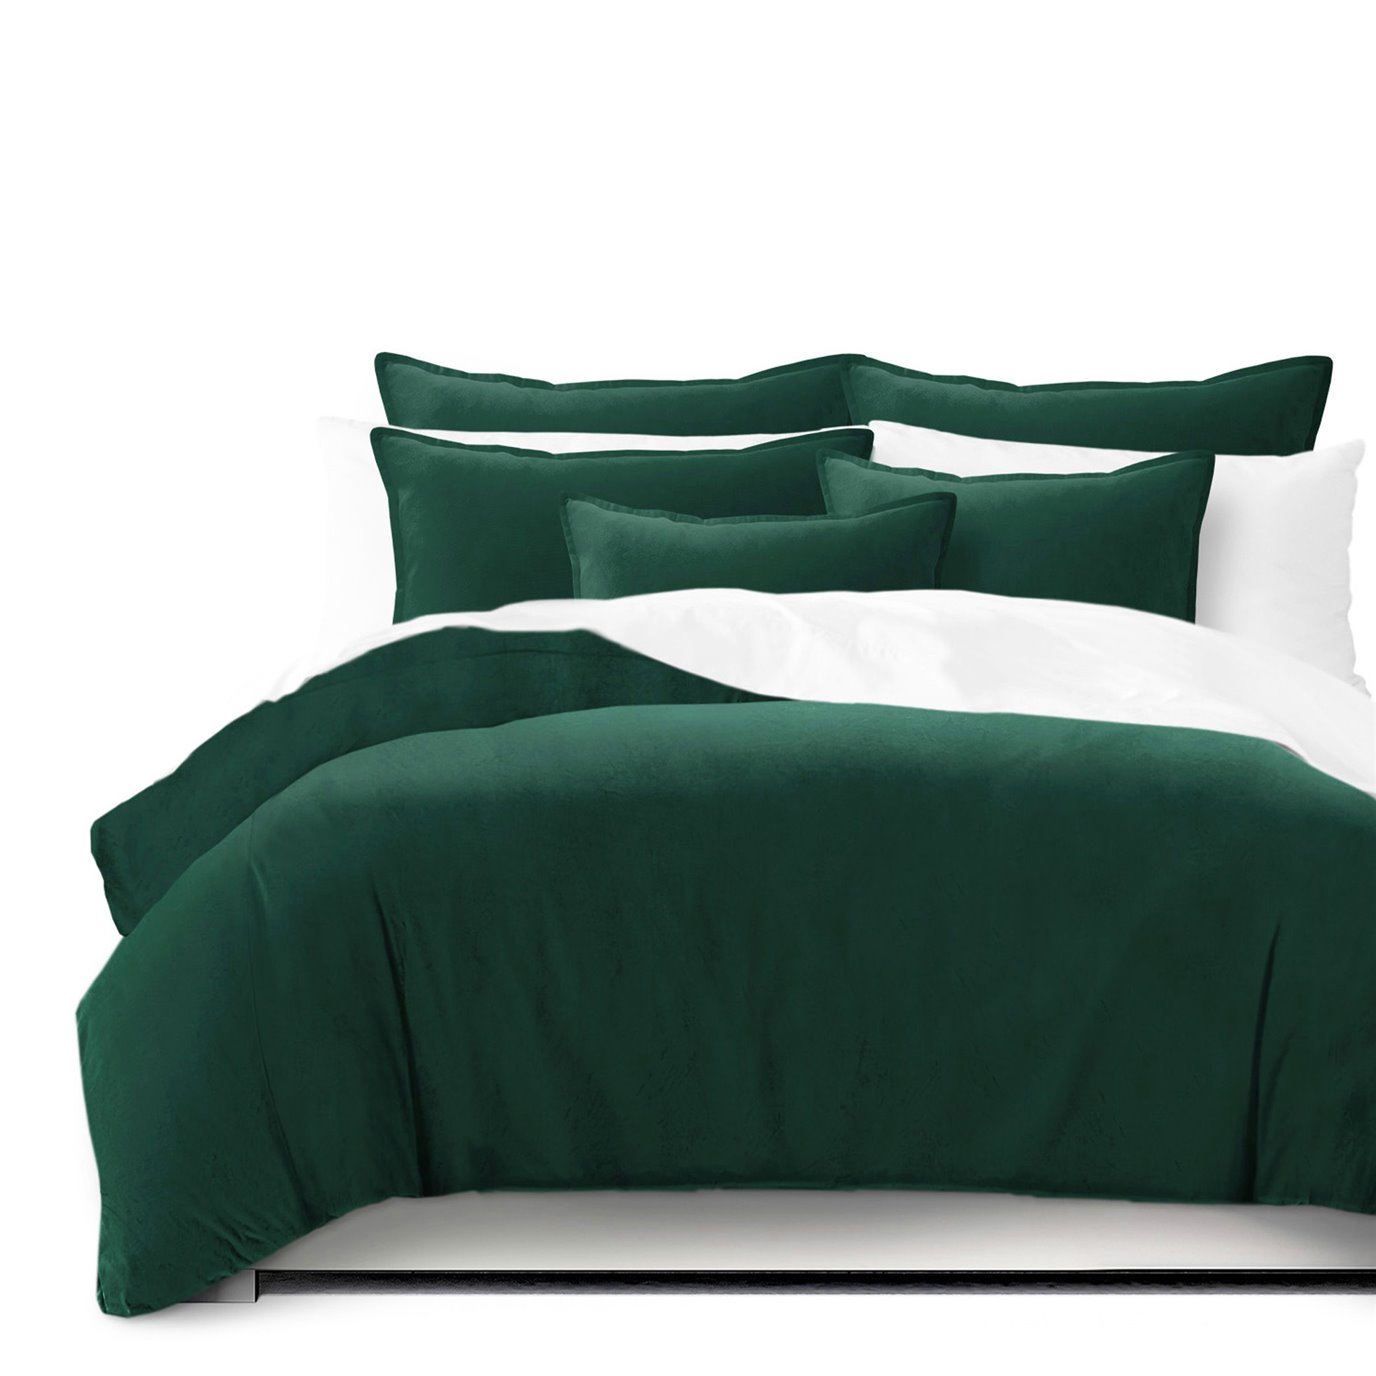 Vanessa Emerald Comforter and Pillow Sham(s) Set - Size Super King